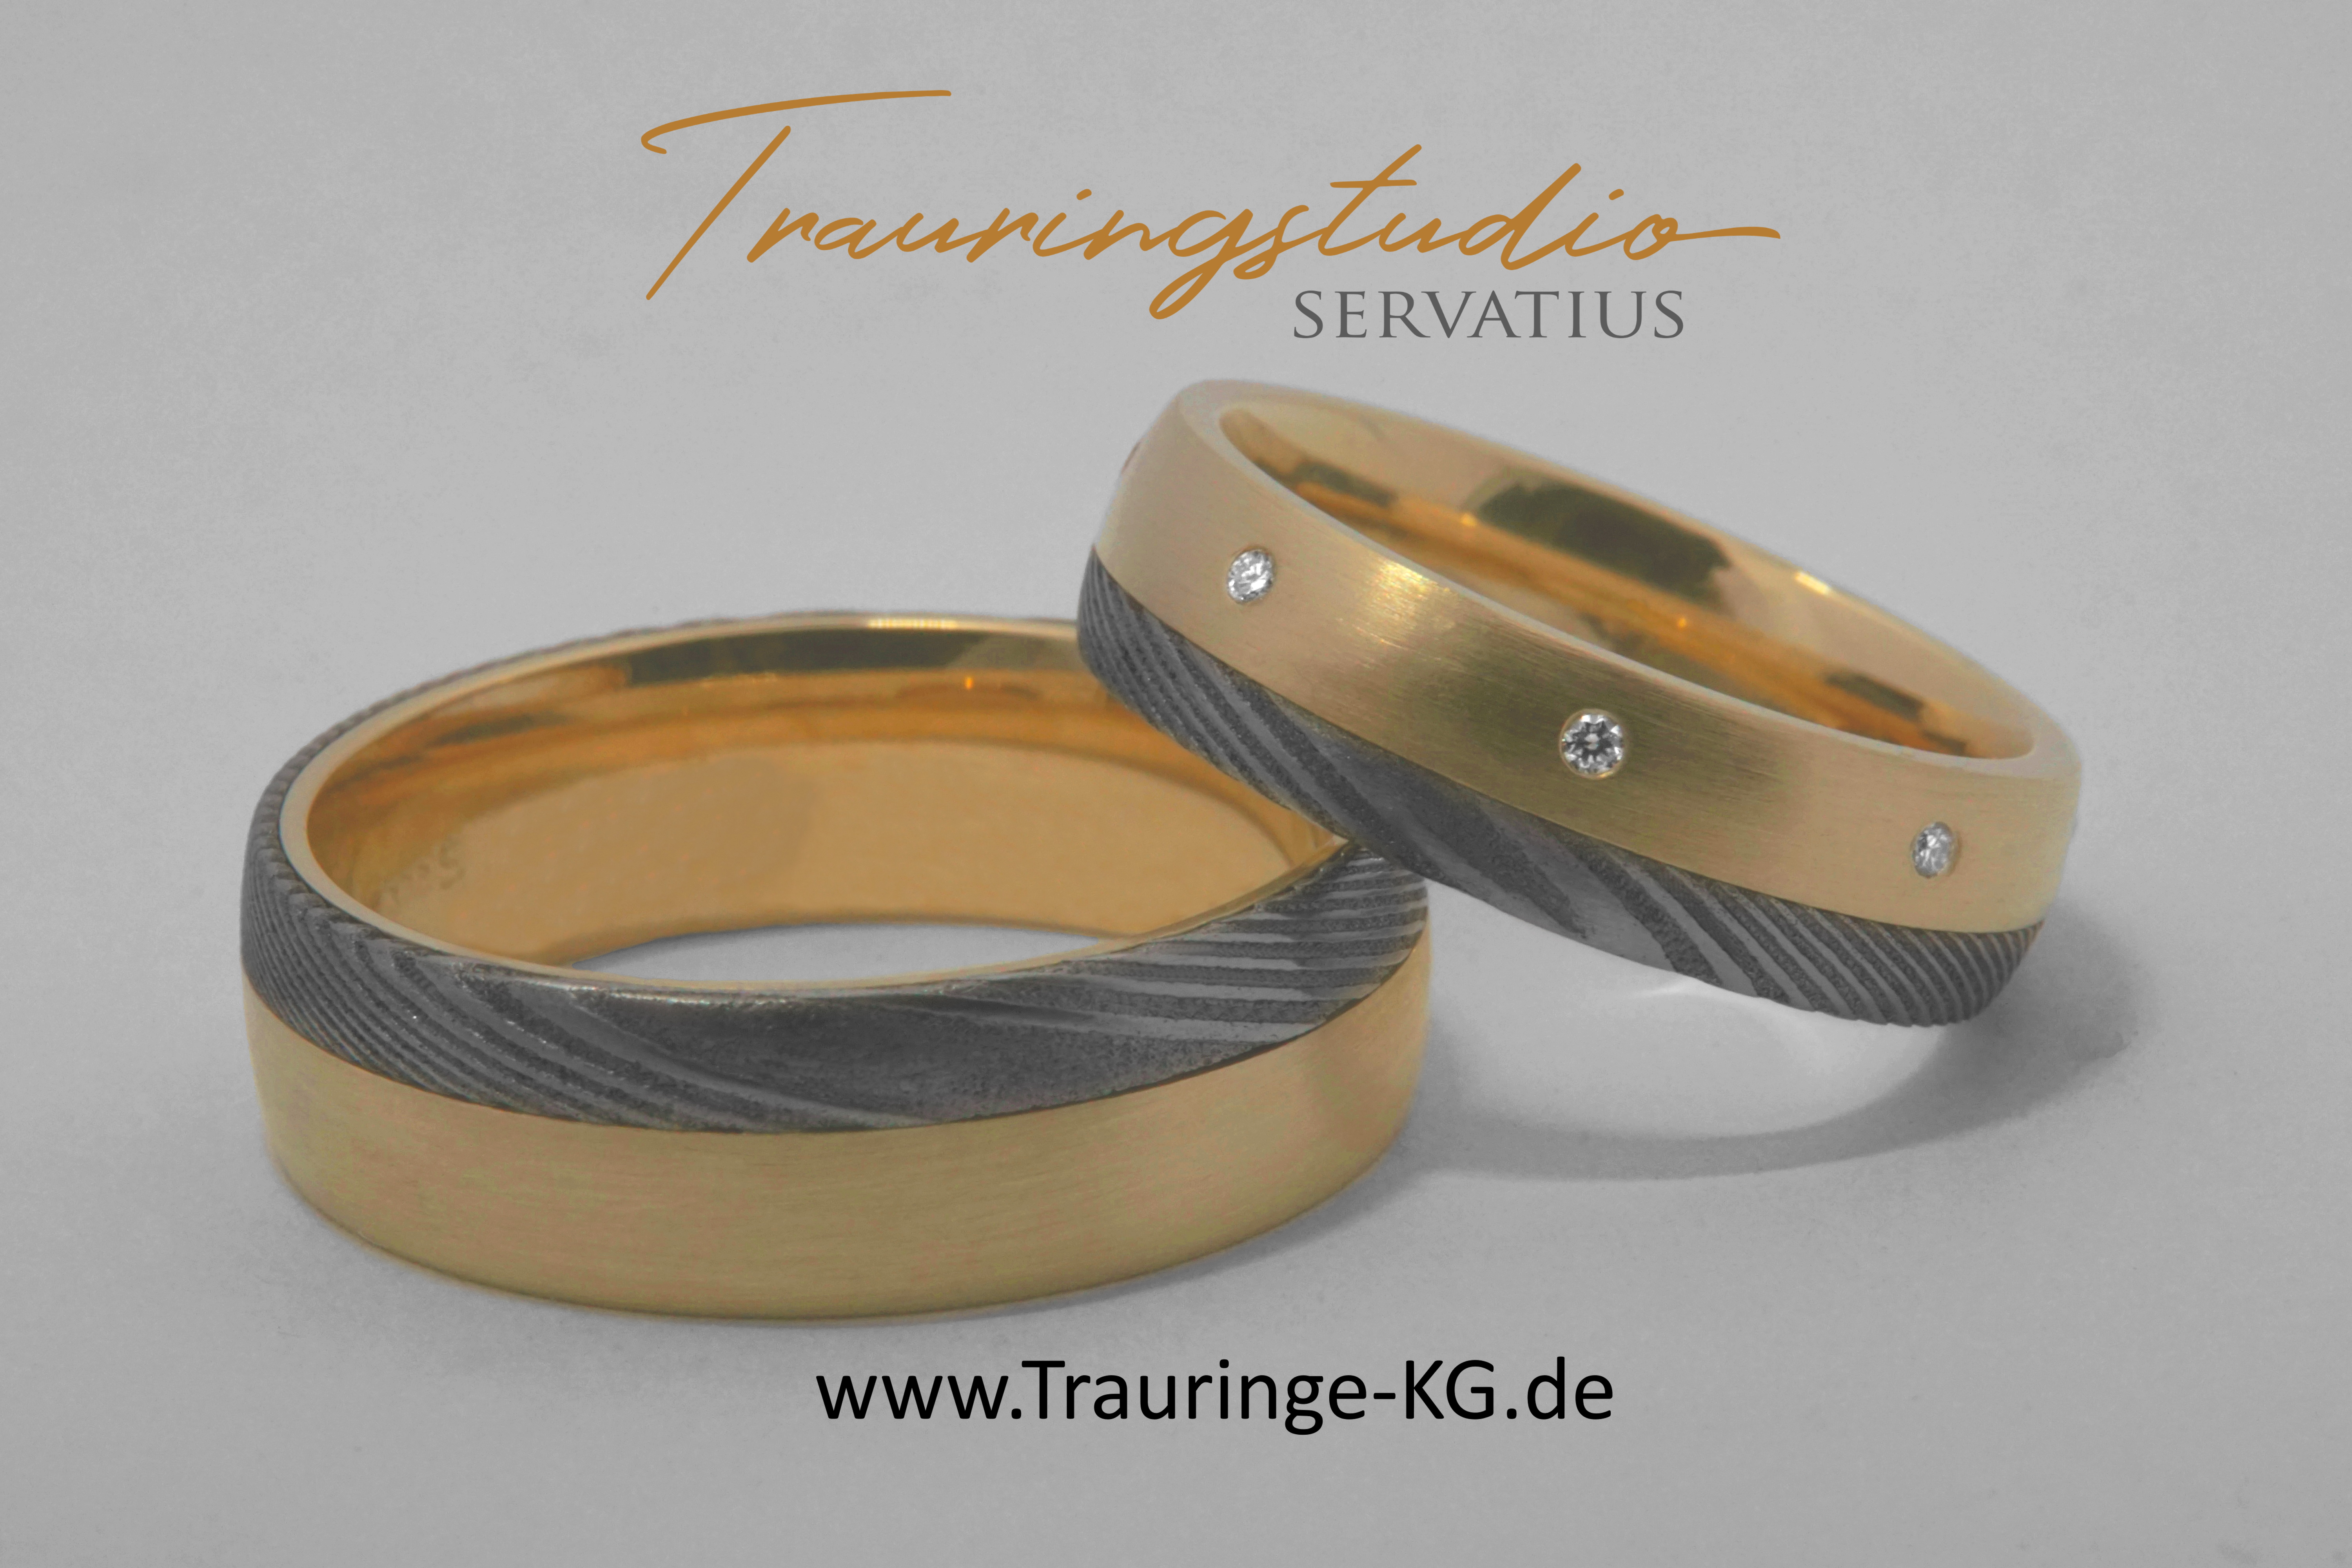 Trauringstudio Servatius Bad Kissingen Damaststahl Gold